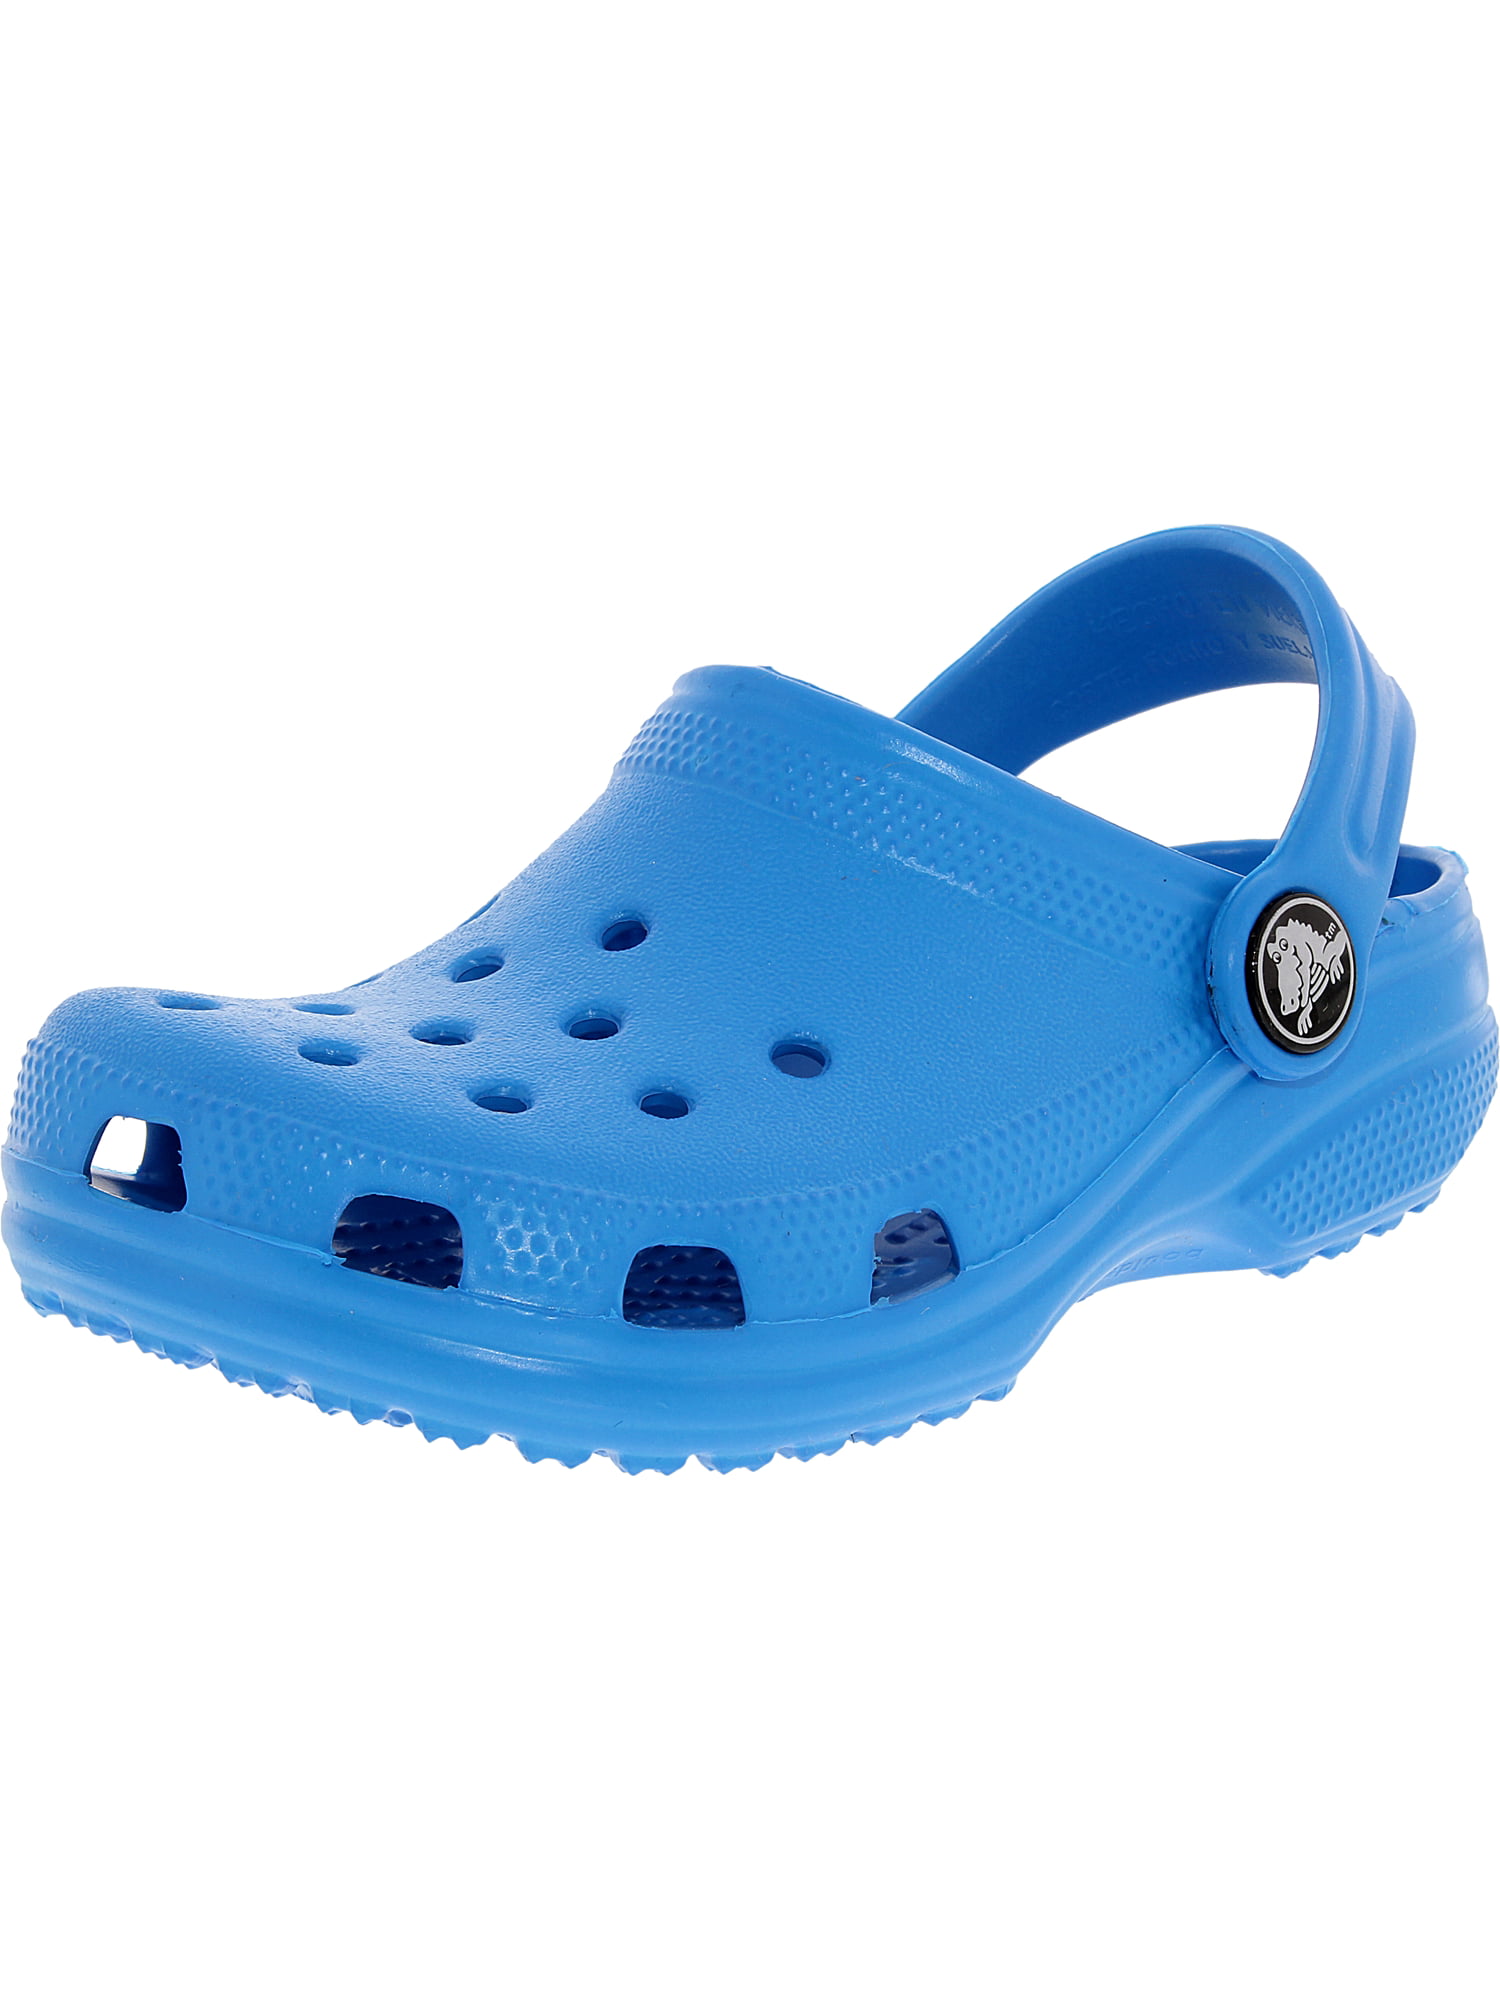 Crocs Girl's Kids Classic Ocean Ankle-High Rubber Flat Shoe - 6M ...